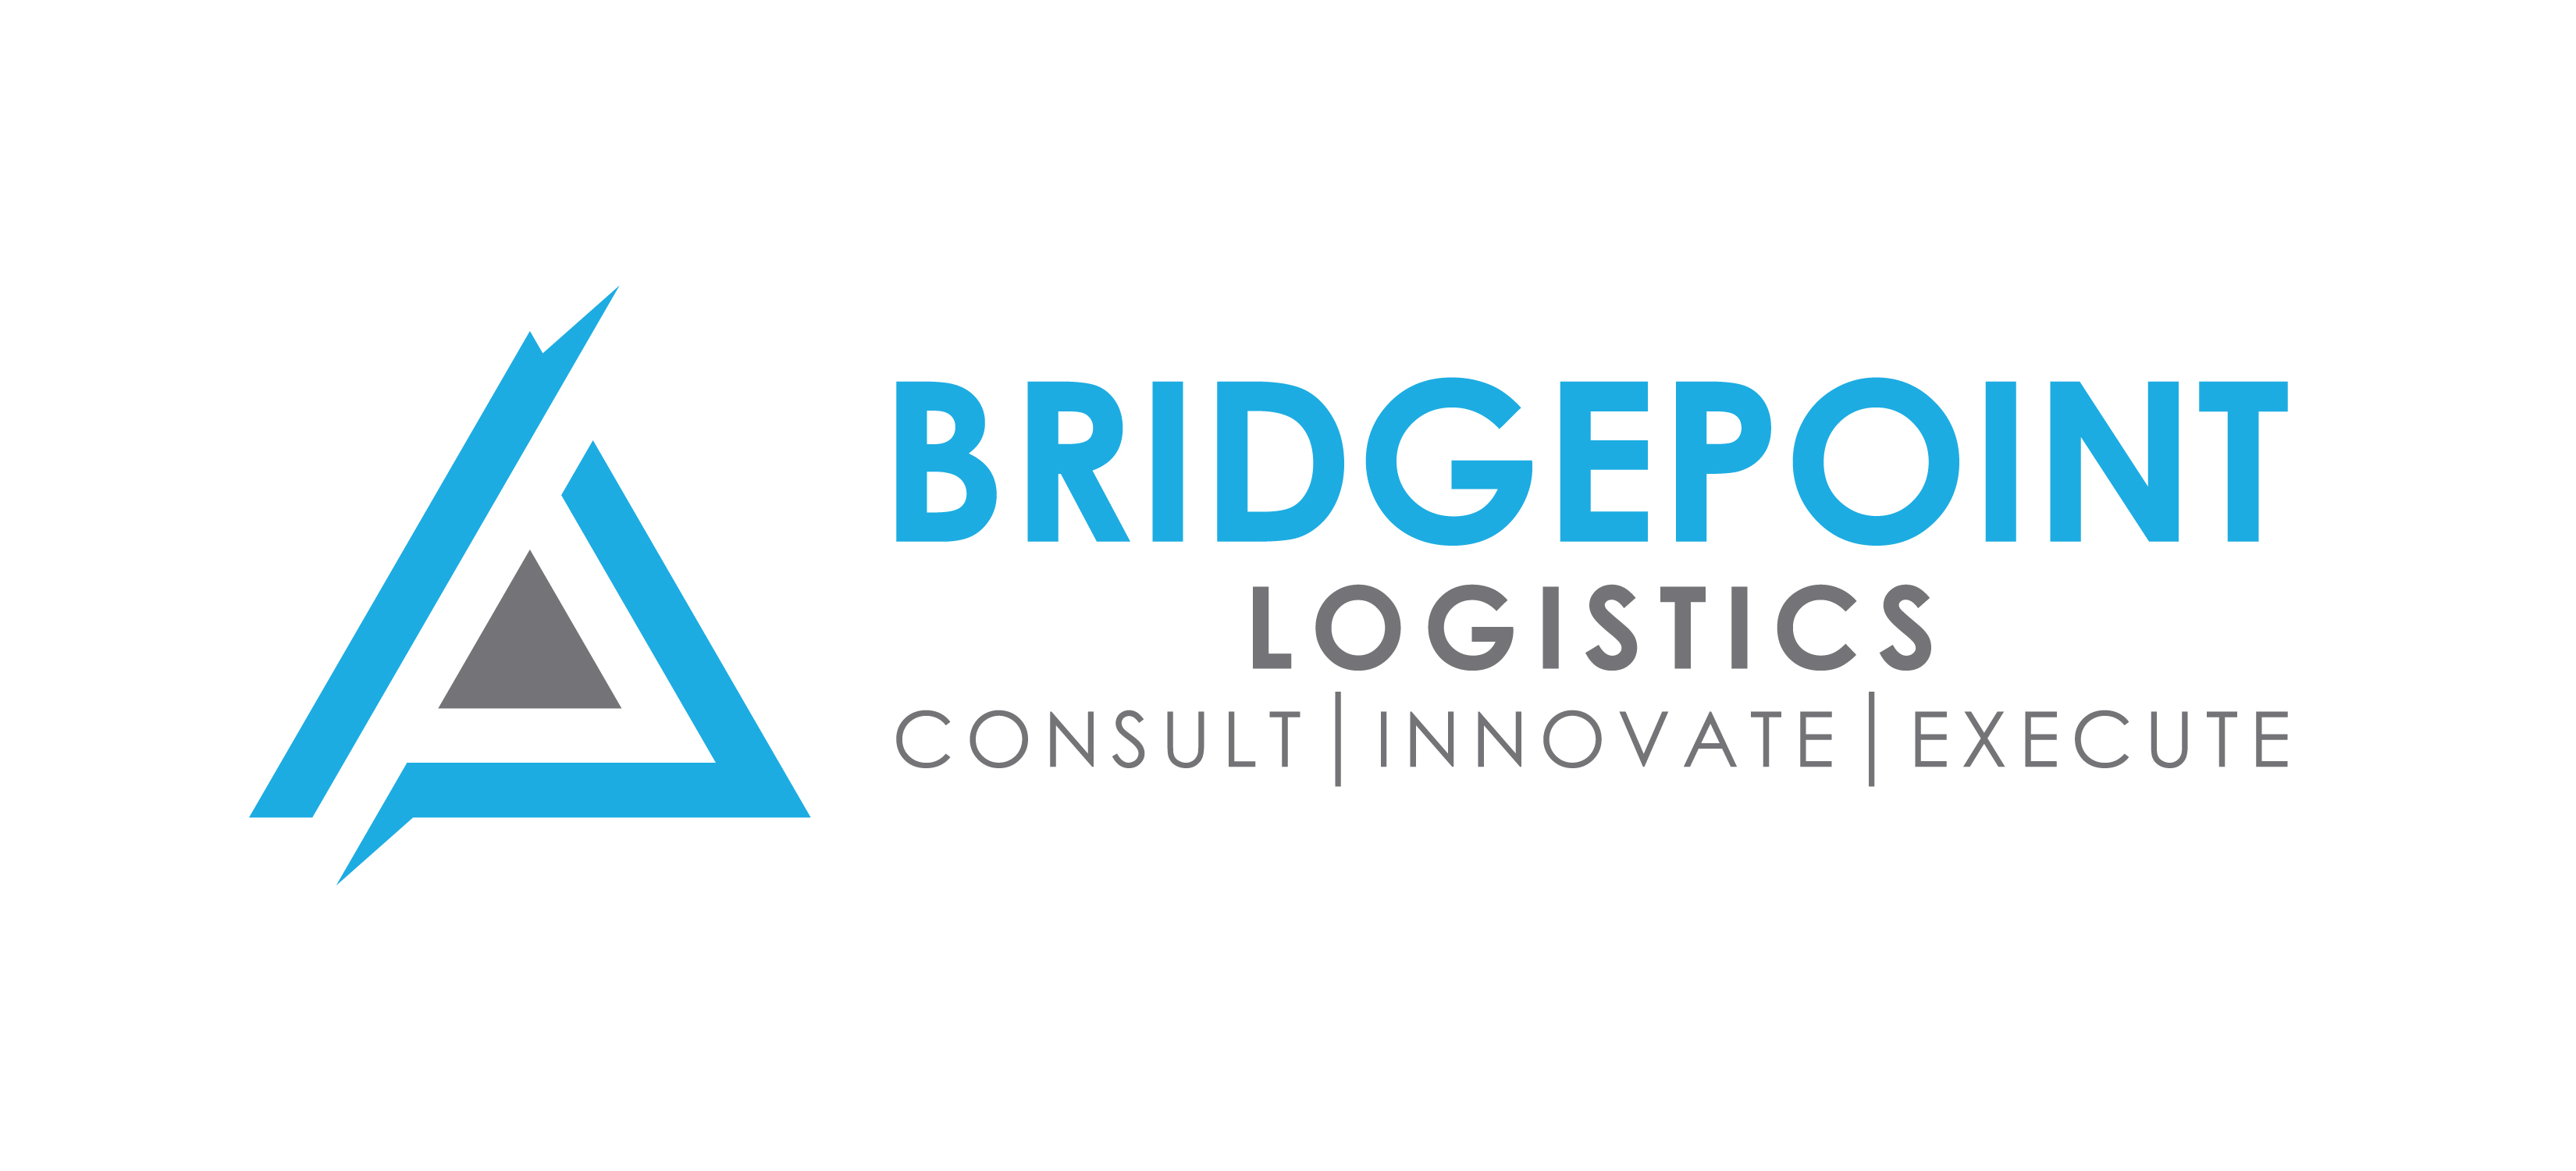 Bridgepoint Logistics Logo